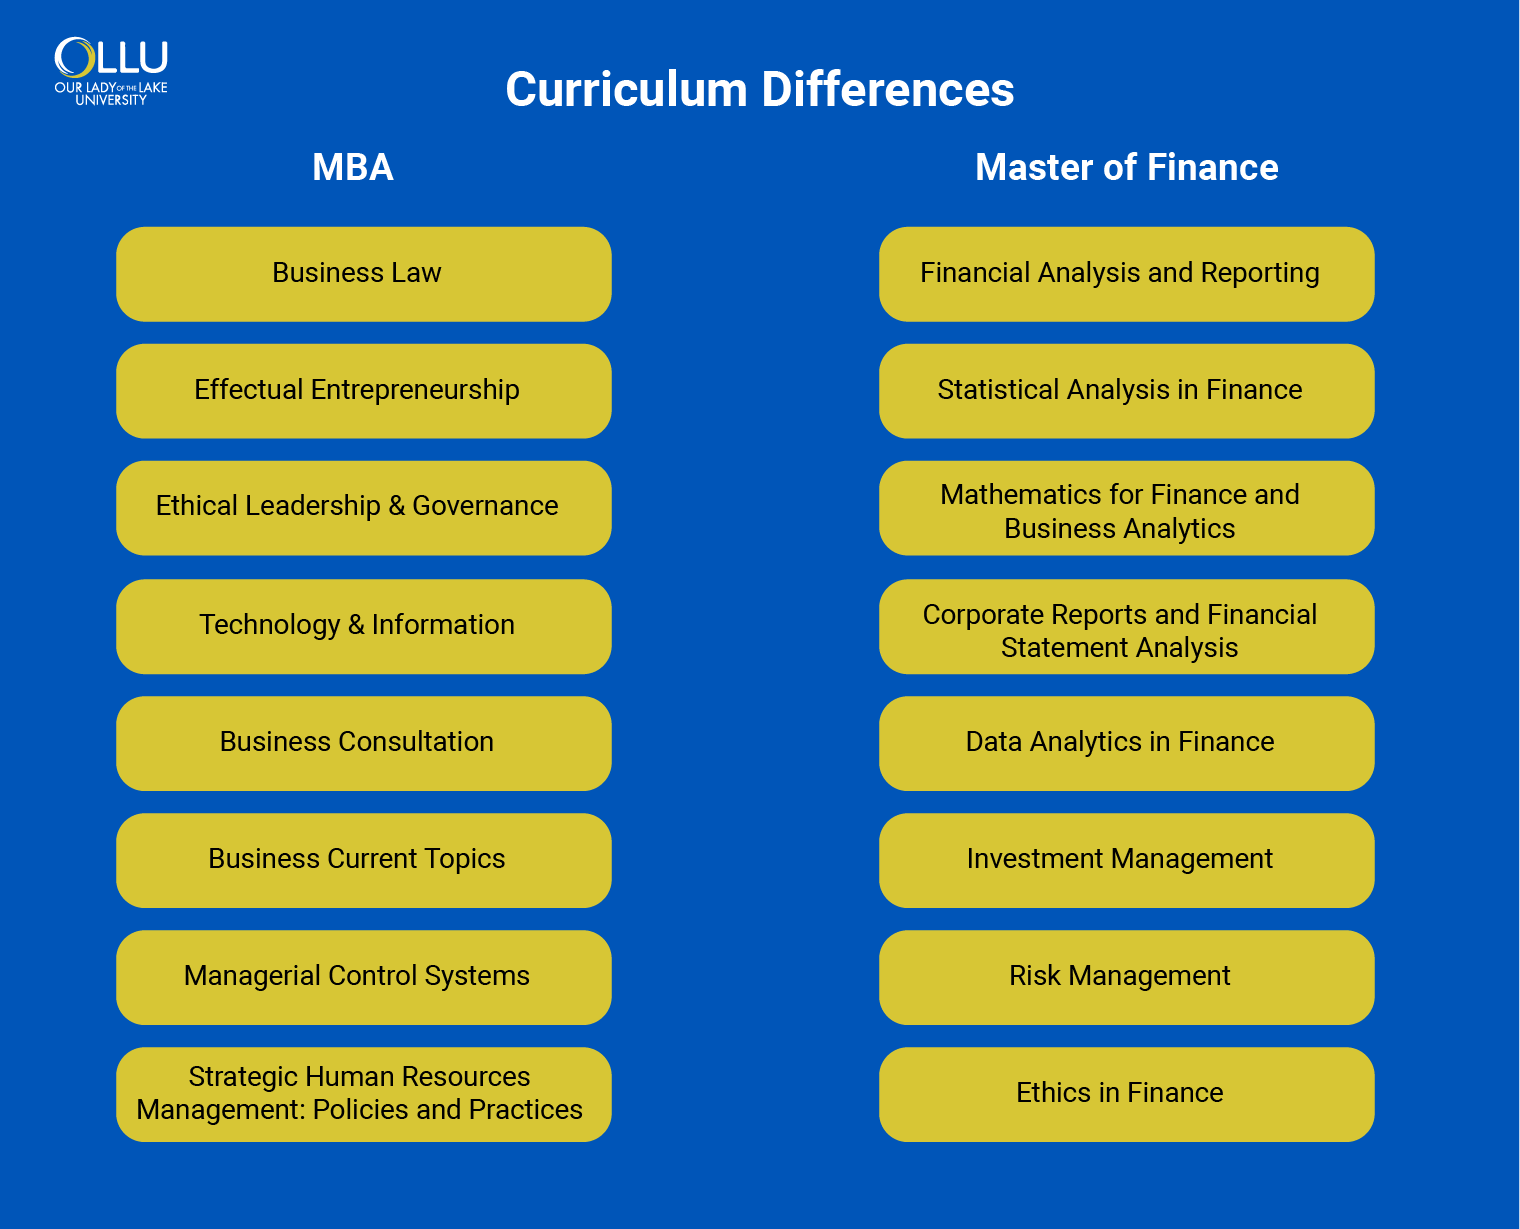 mba-vs-master-finance-curriculum